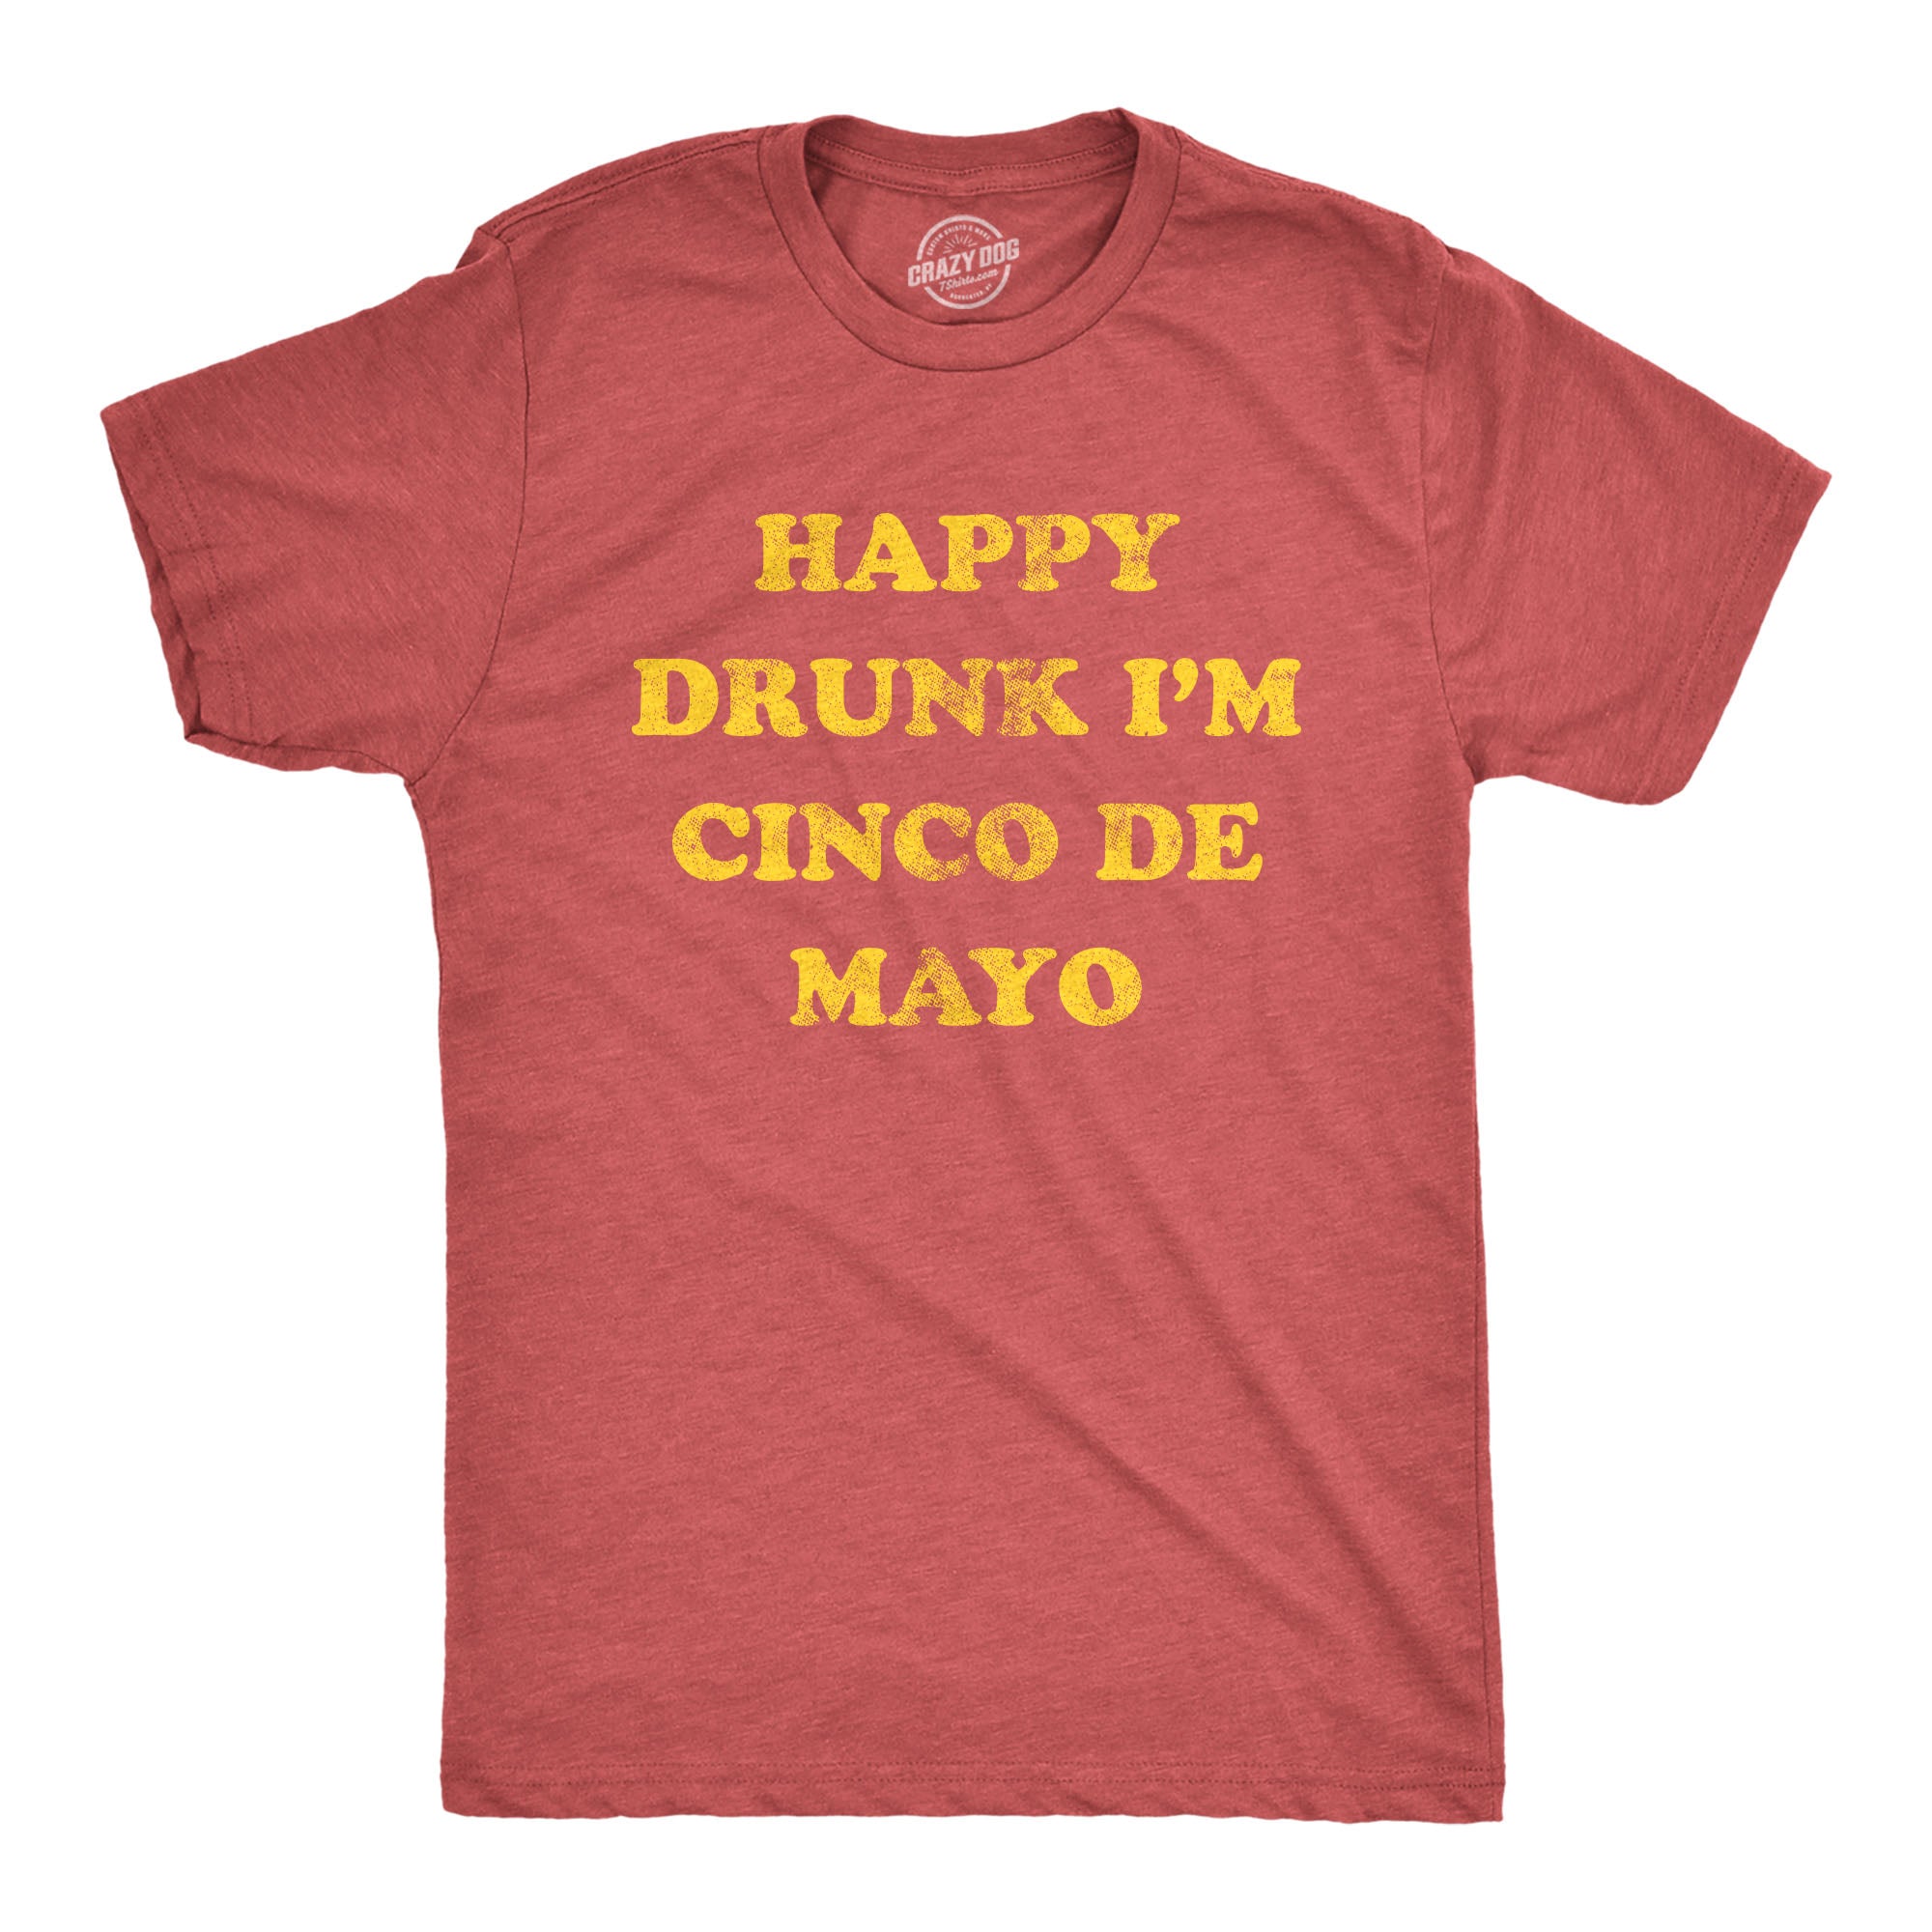 Funny Heather Red - DRUNK Happy Drunk Im Cinco De Mayo Mens T Shirt Nerdy Cinco De Mayo Drinking Tee